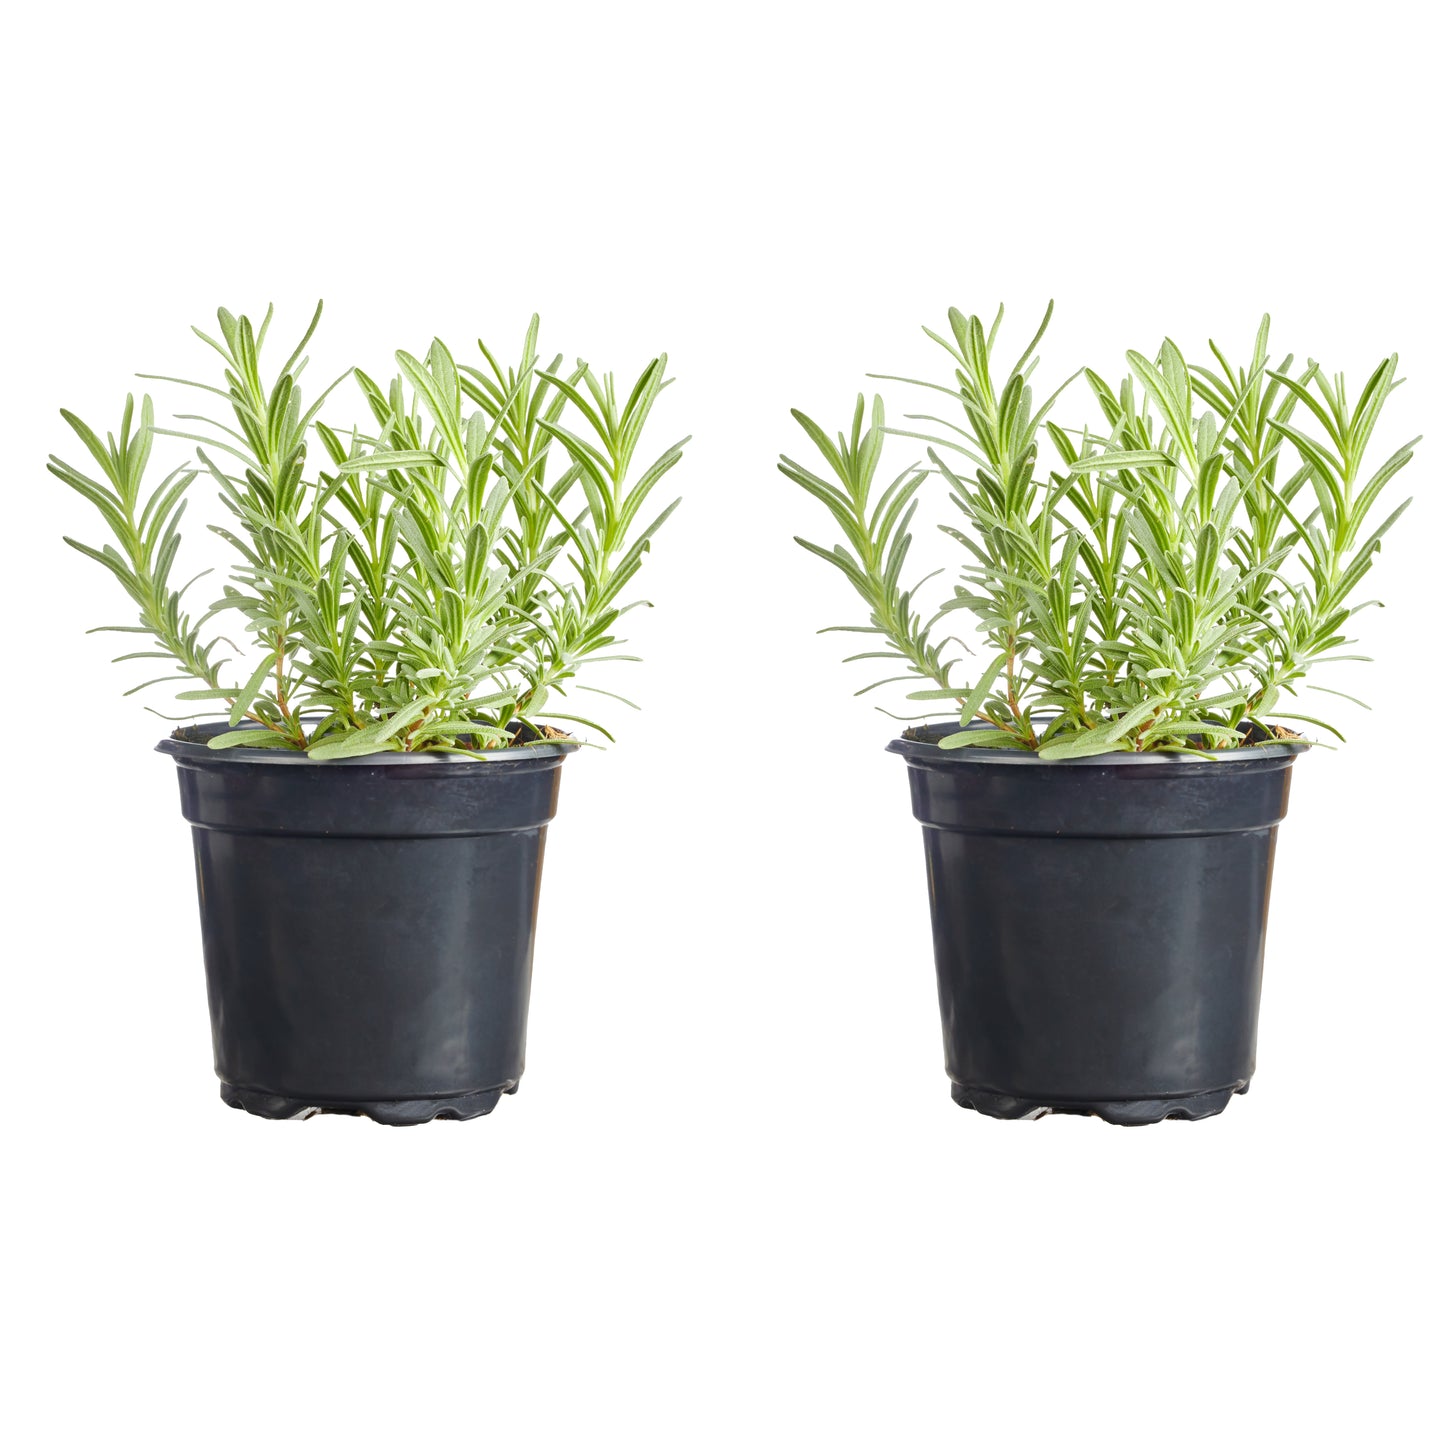 Lavender Munstead Plantlings Live Baby Plants 4in. Pot, 2-Pack